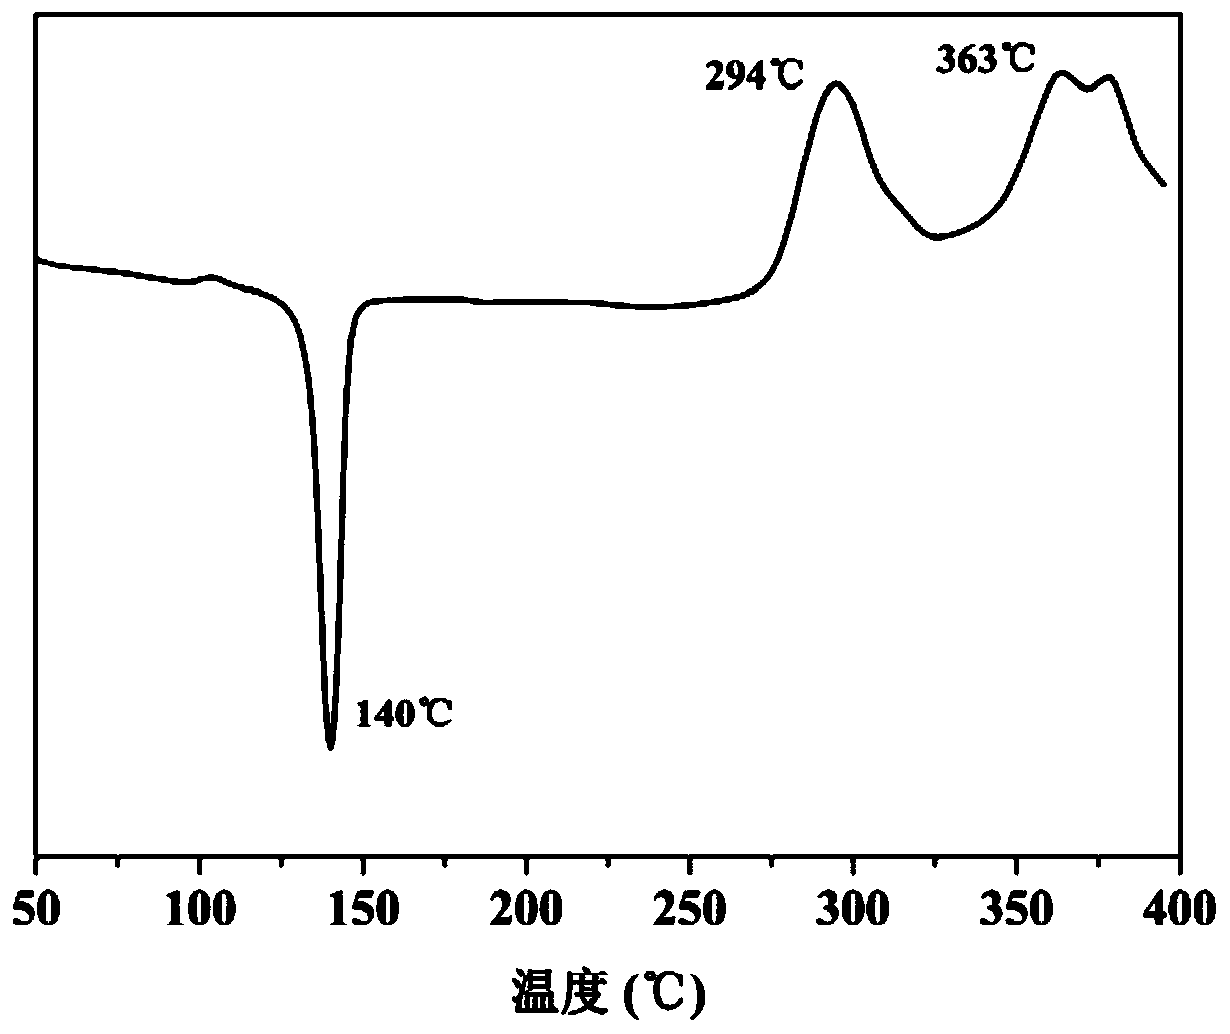 Preparation method of fluorine-containing autocatalytic phthalonitrile resin